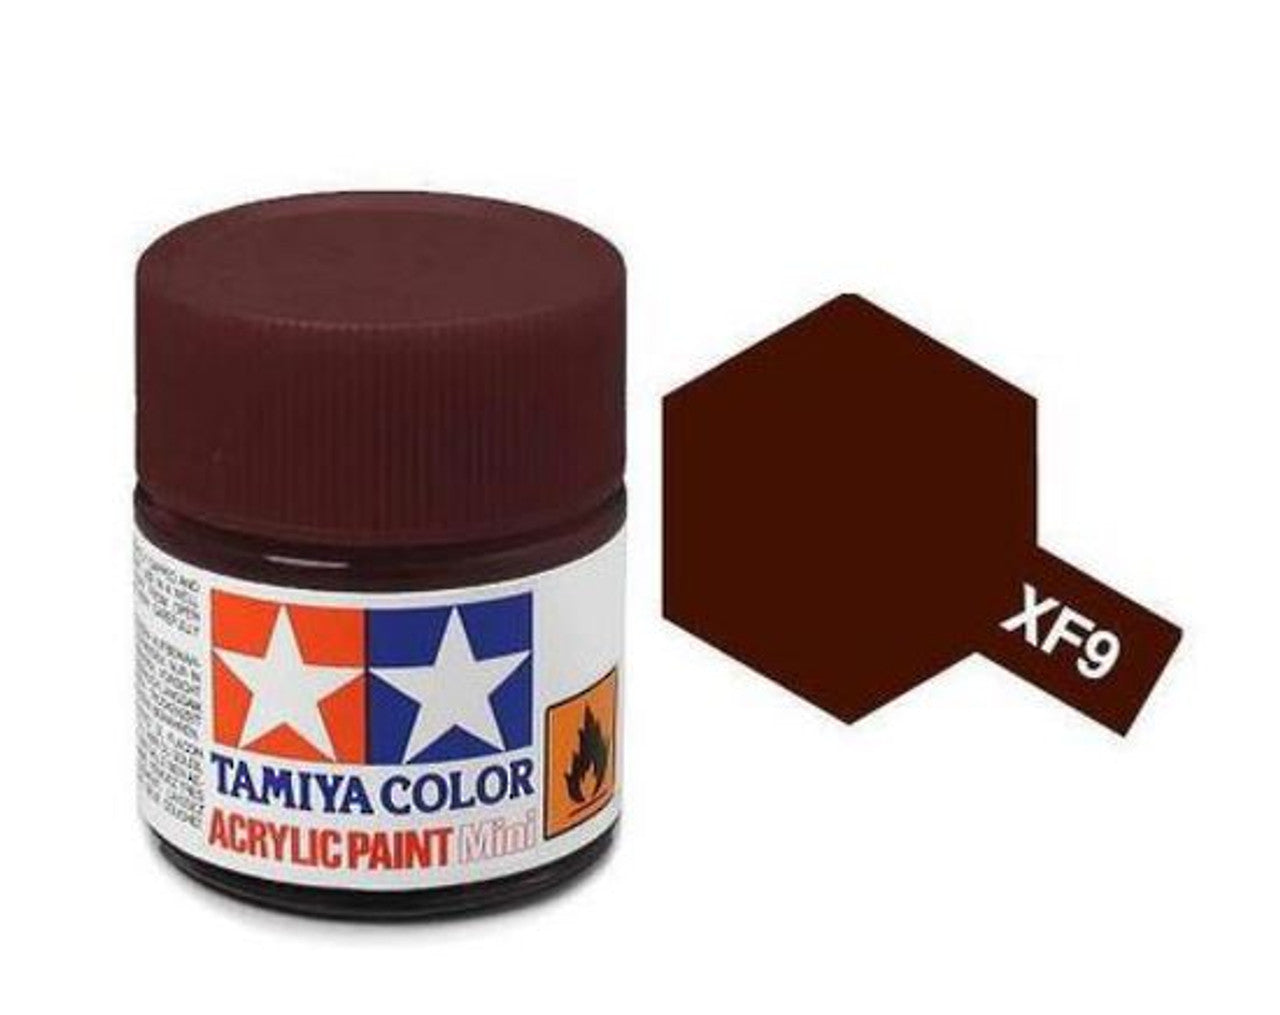 Tamiya Color Acrylic Paint XF-9 Hull Red 10ml